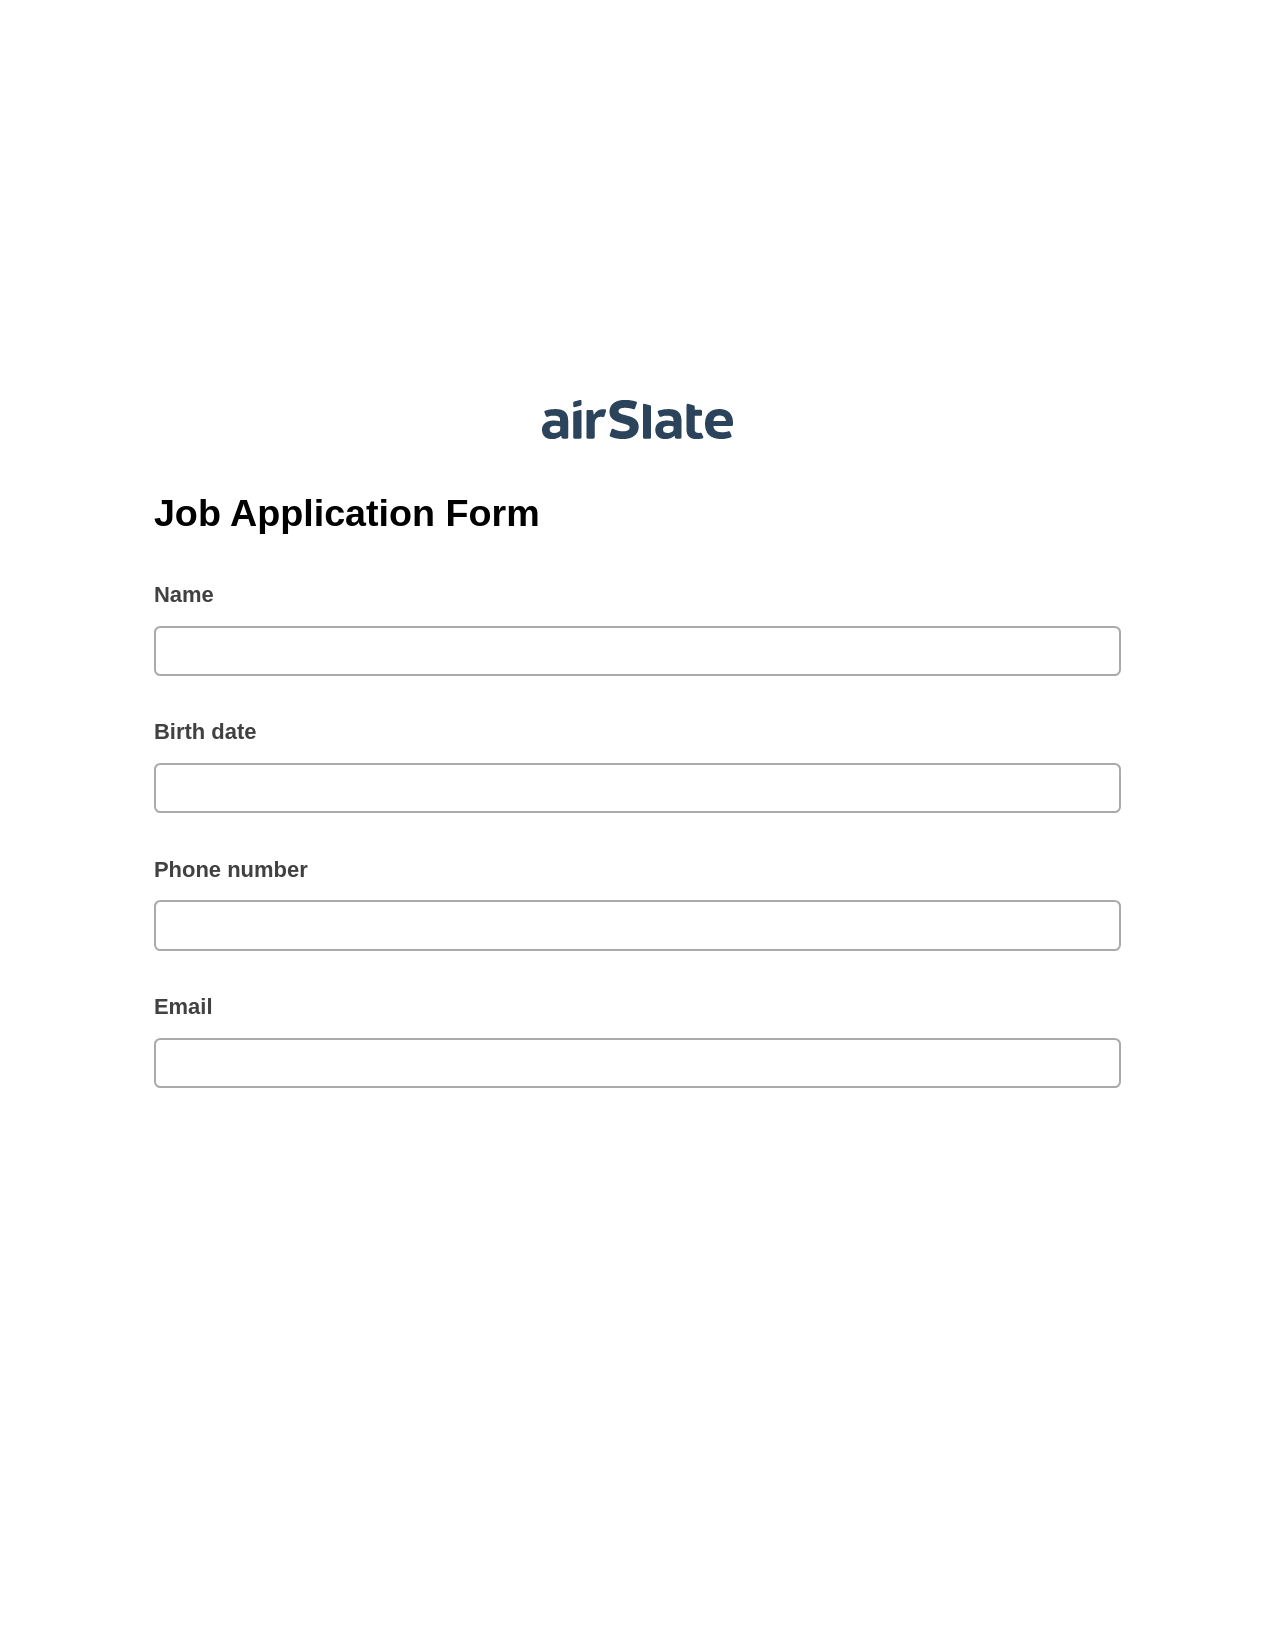 Multirole Job Application Form Pre-fill Dropdowns from Smartsheet Bot, Pre-fill with Custom Data Bot, Post-finish Document Bot